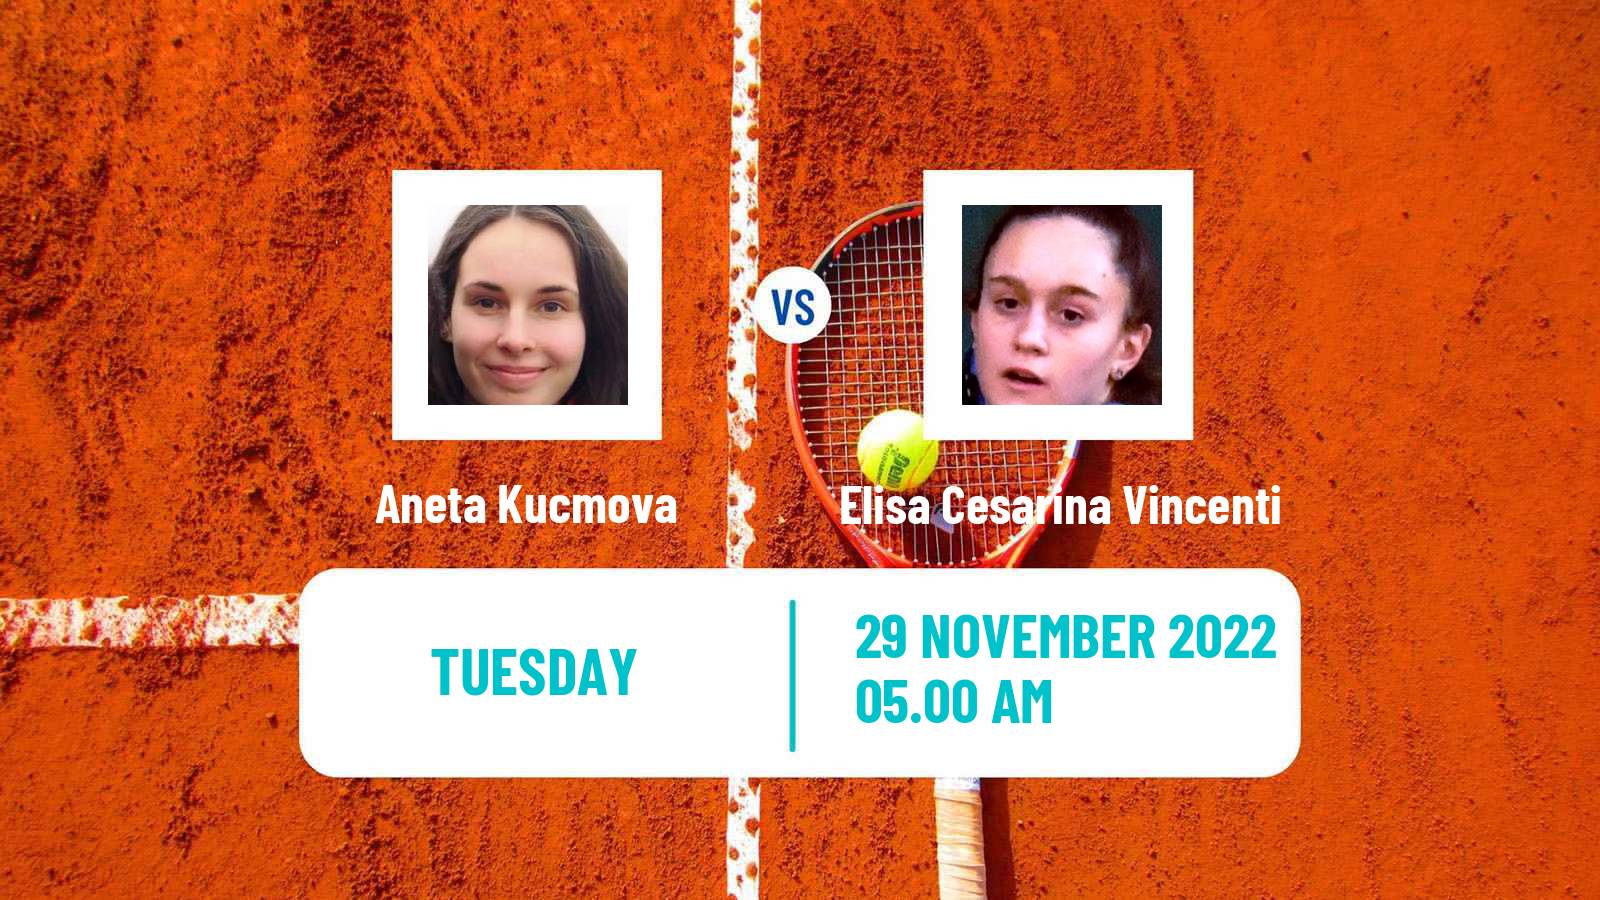 Tennis ITF Tournaments Aneta Kucmova - Elisa Cesarina Vincenti